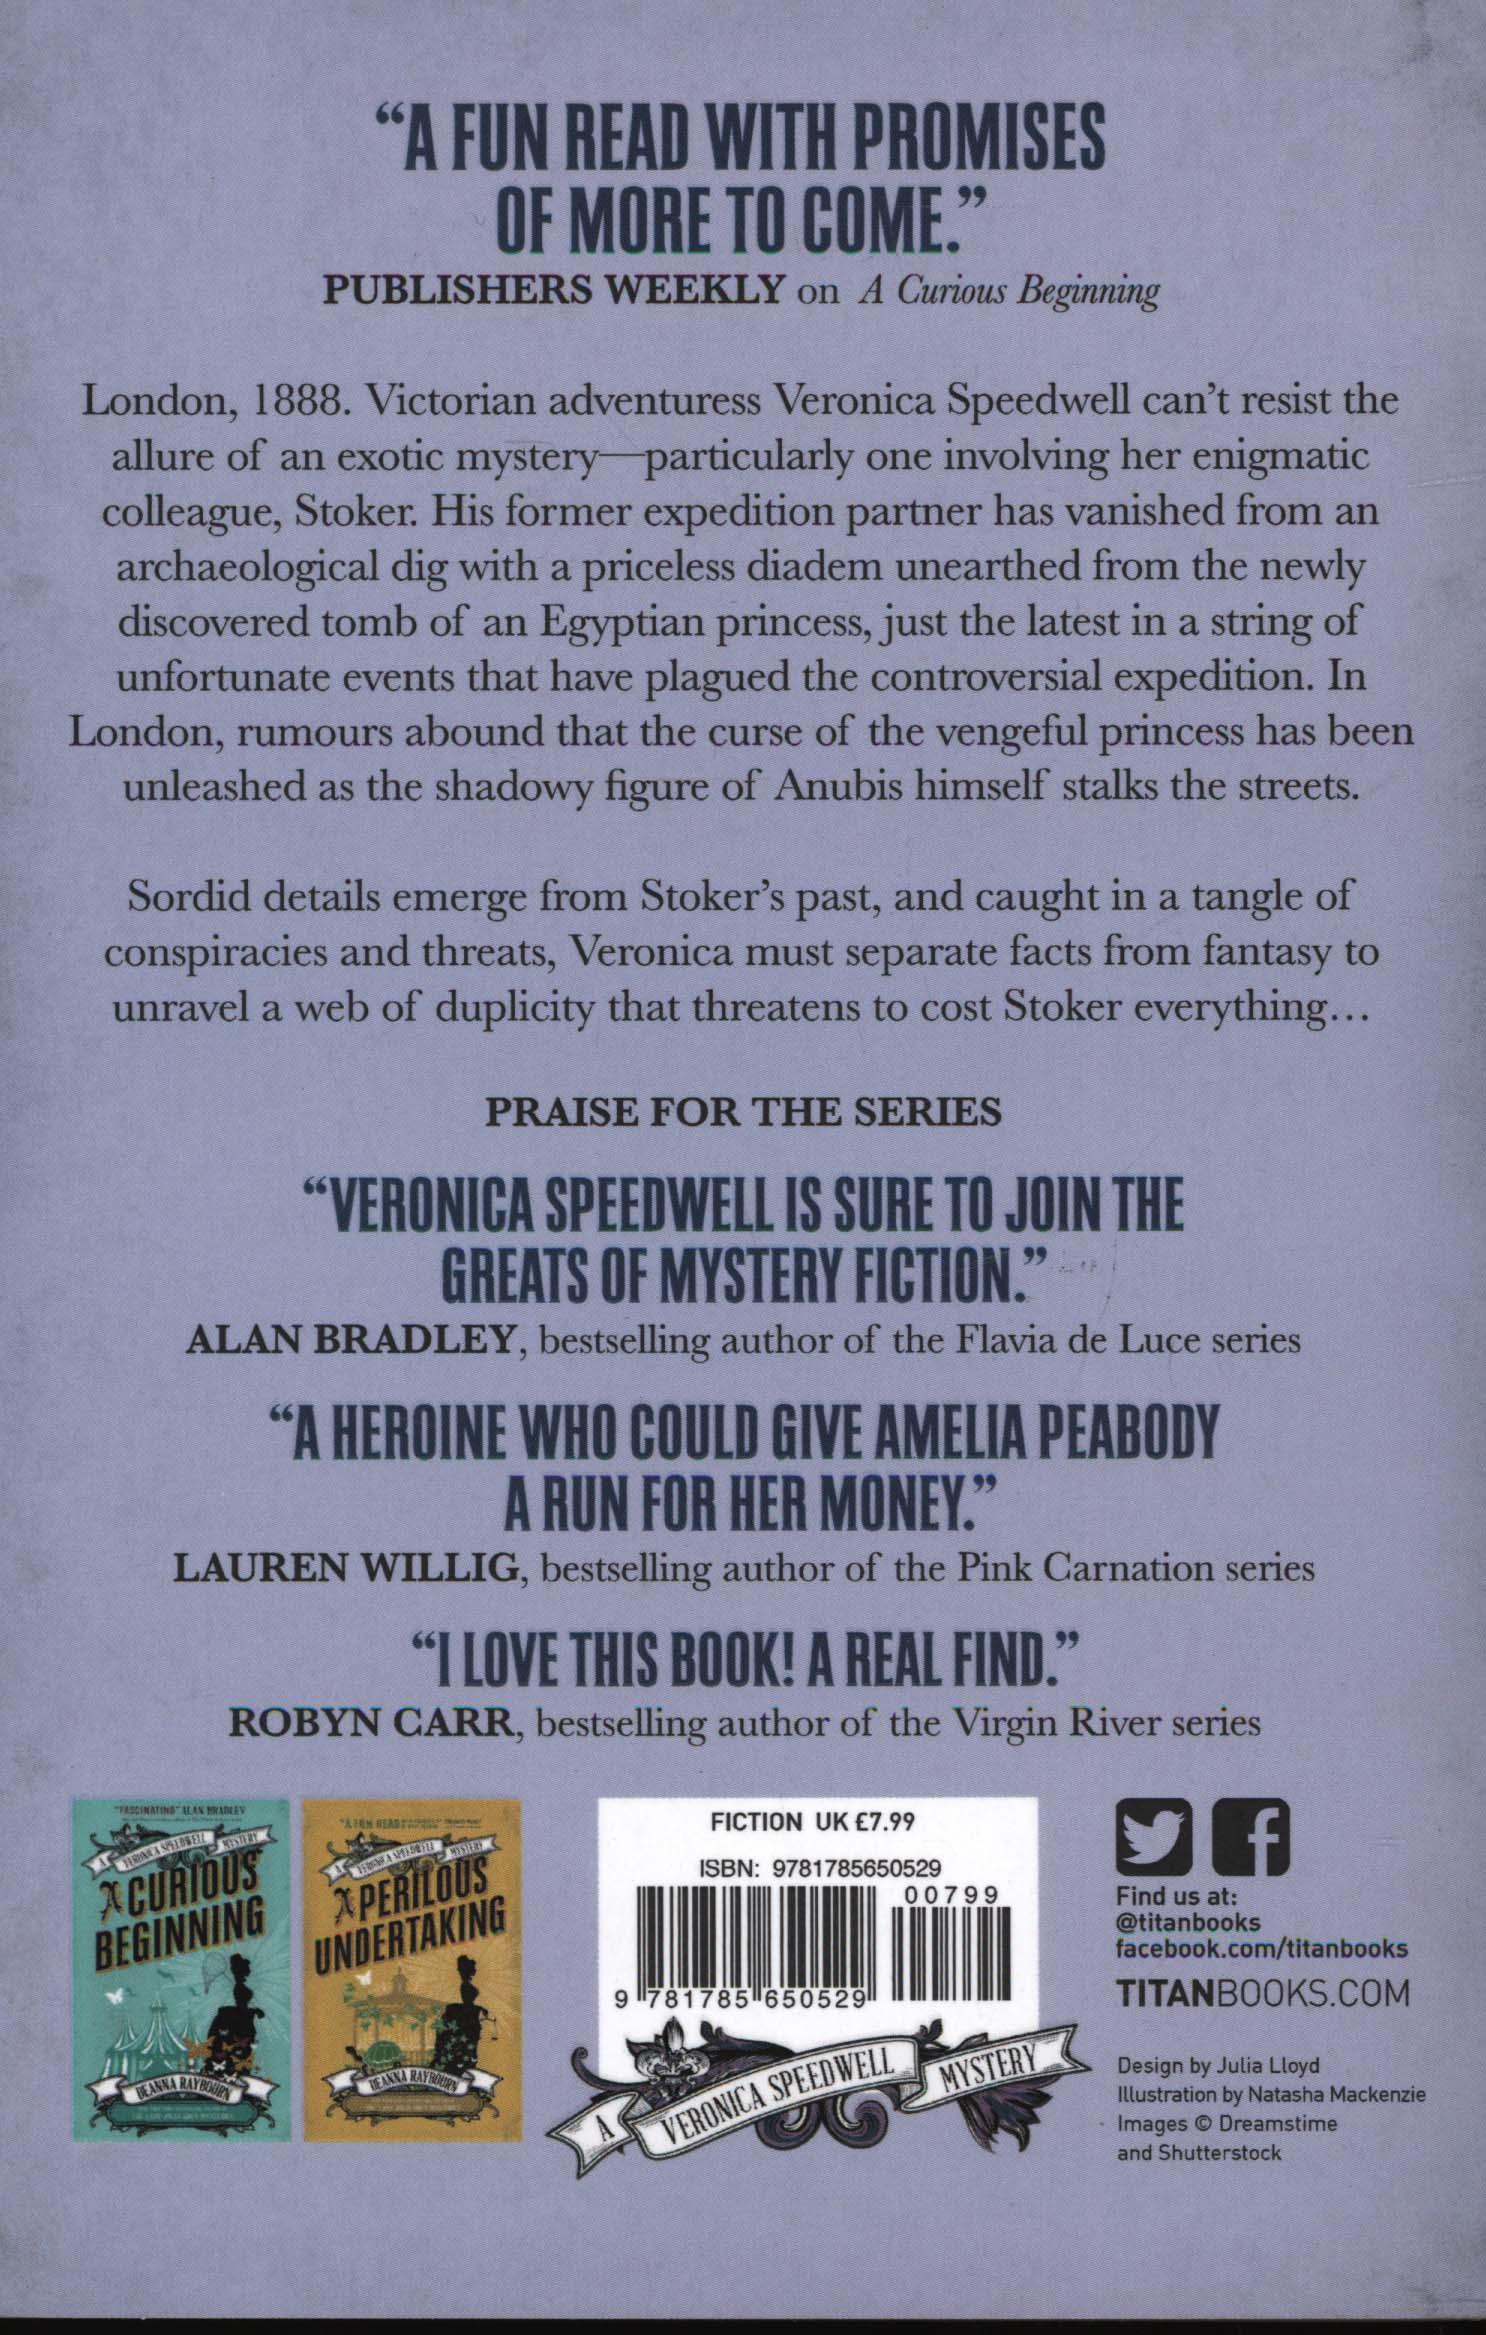 Veronica Speedwell Mystery - A Treacherous Curse